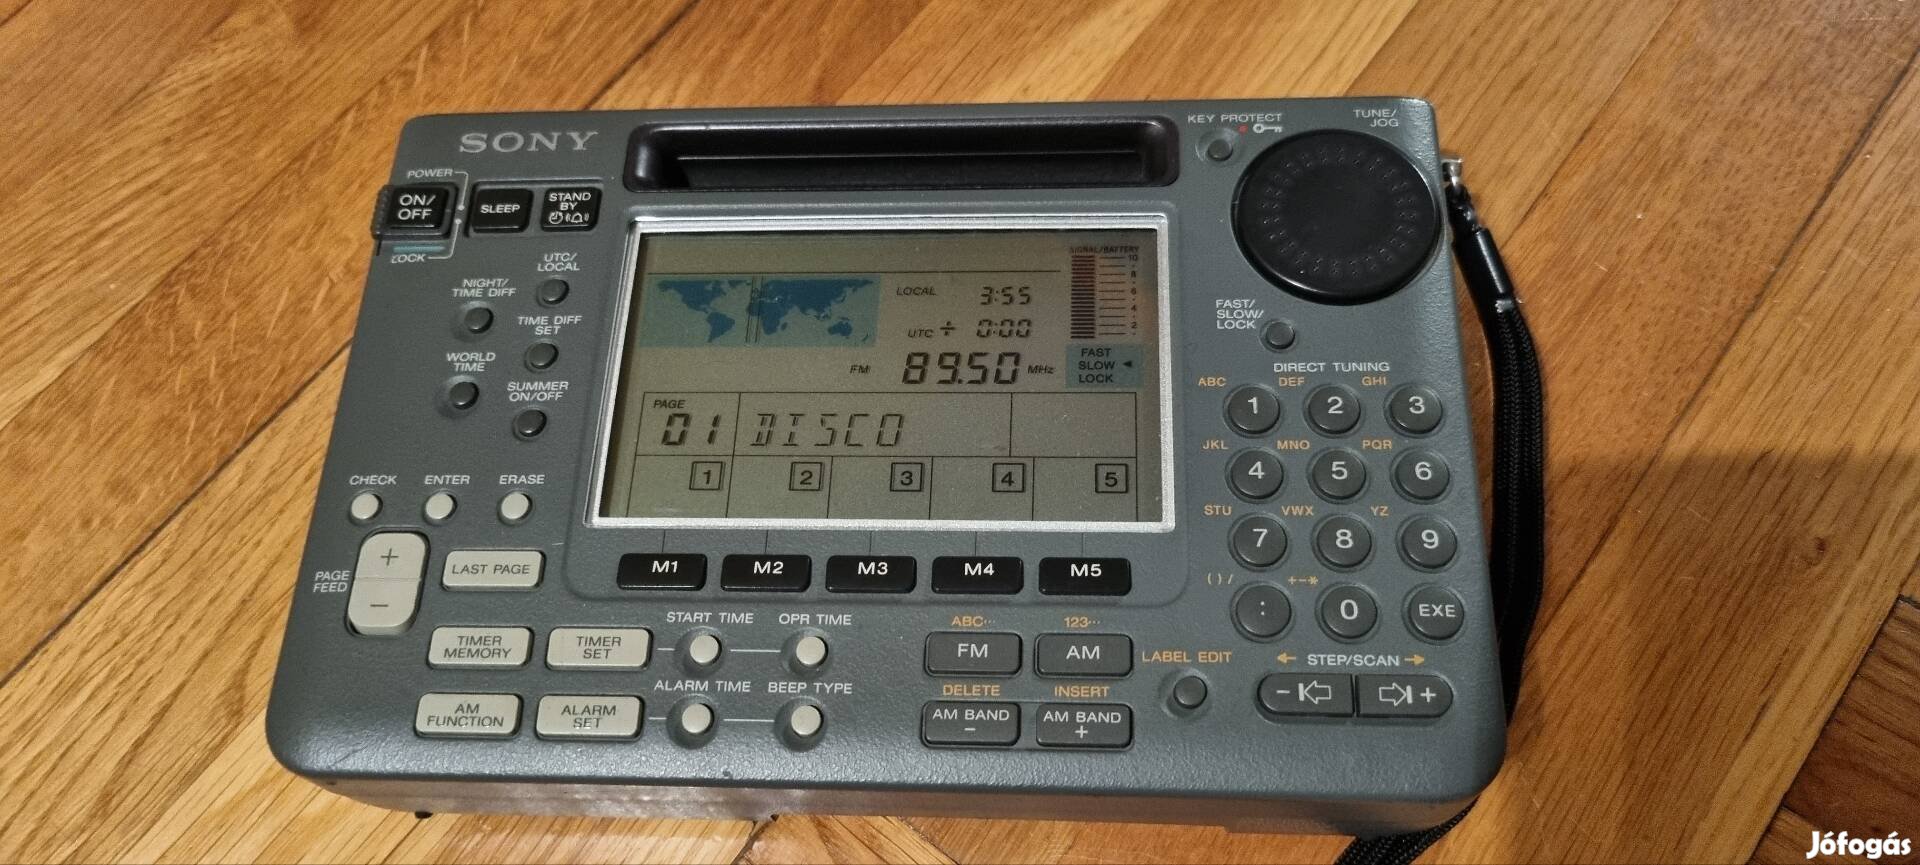 Sony ICF-SW55 világvevő rádió 